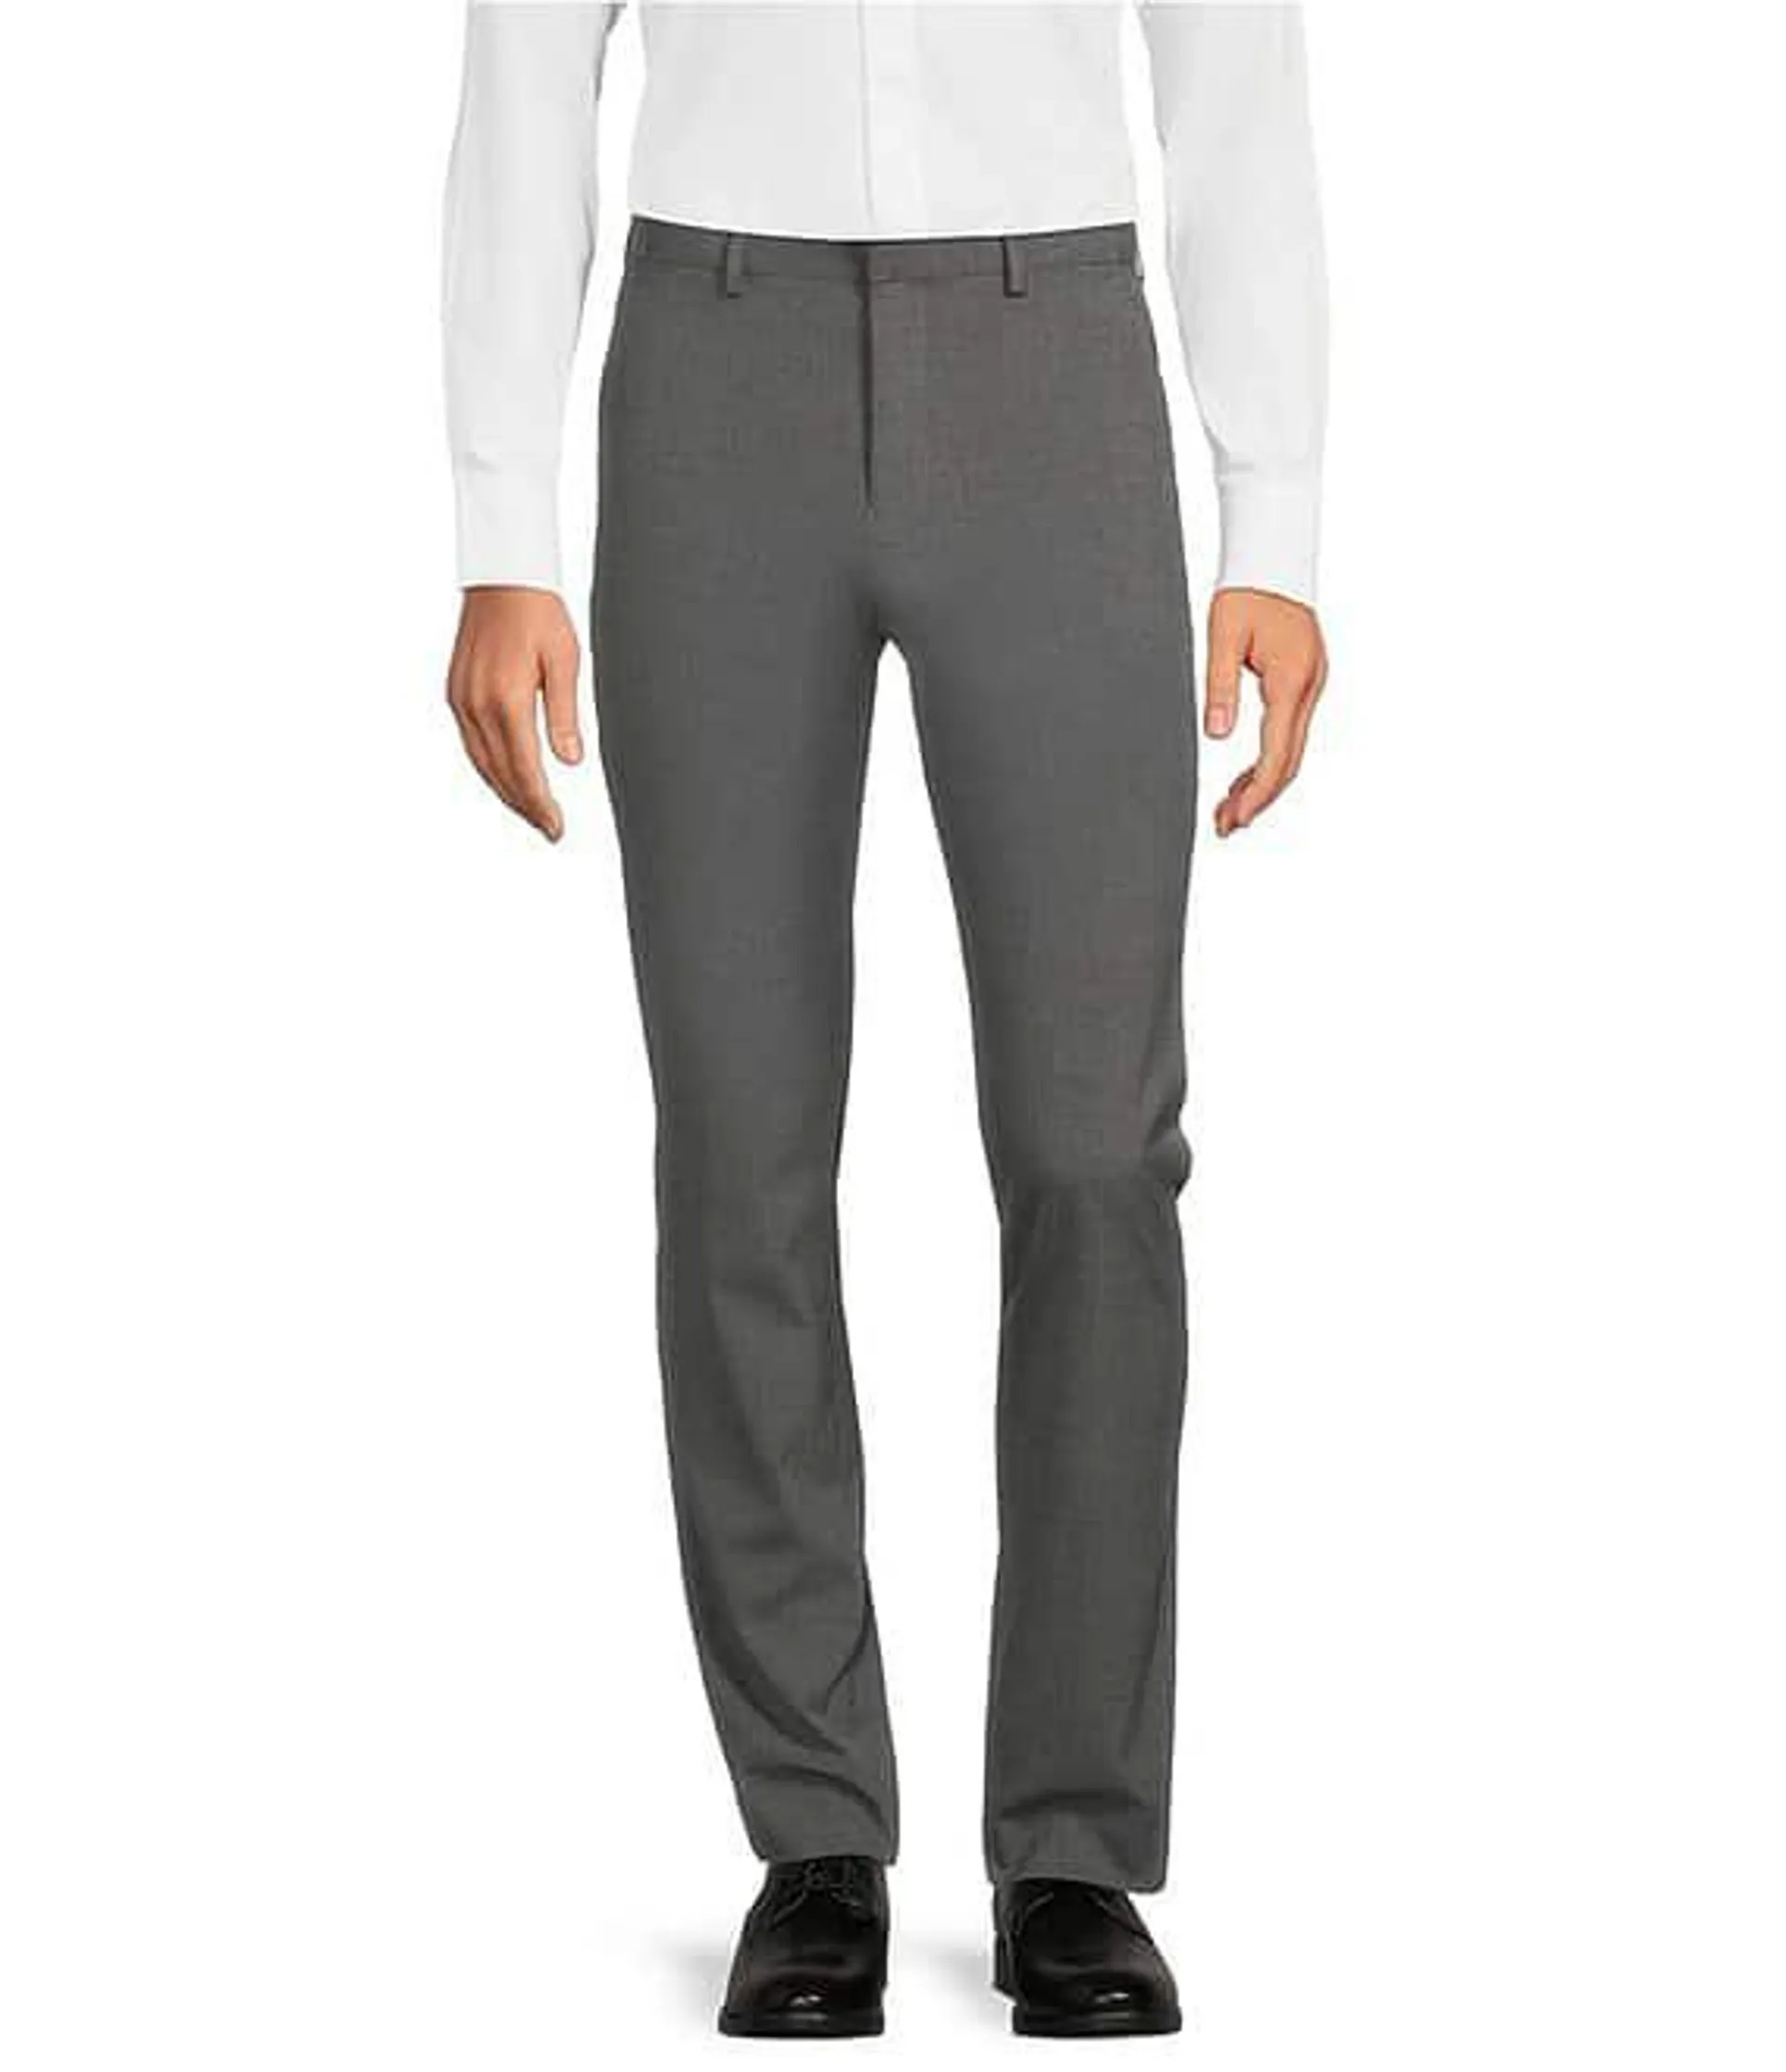 Wardrobe Essentials Evan Extra Slim Fit TekFit Waistband Suit Separates Flat Front Dress Pants